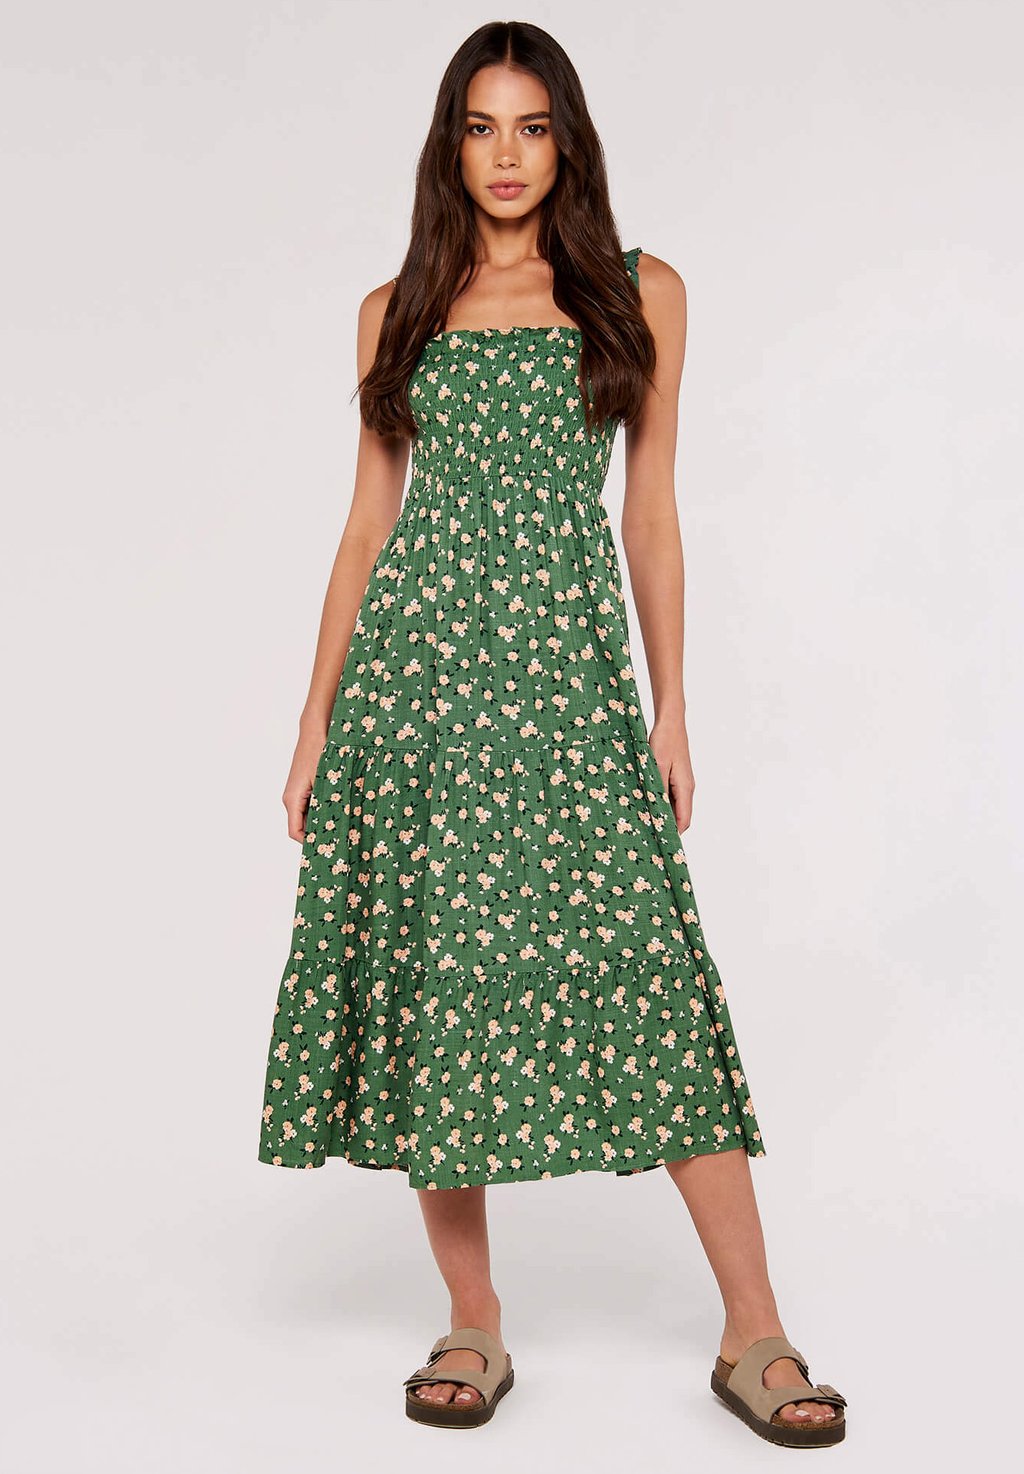 Дневное платье DITSY SMOCKED MIDI Apricot, цвет green дневное платье ditsy milkmaid midi apricot цвет green